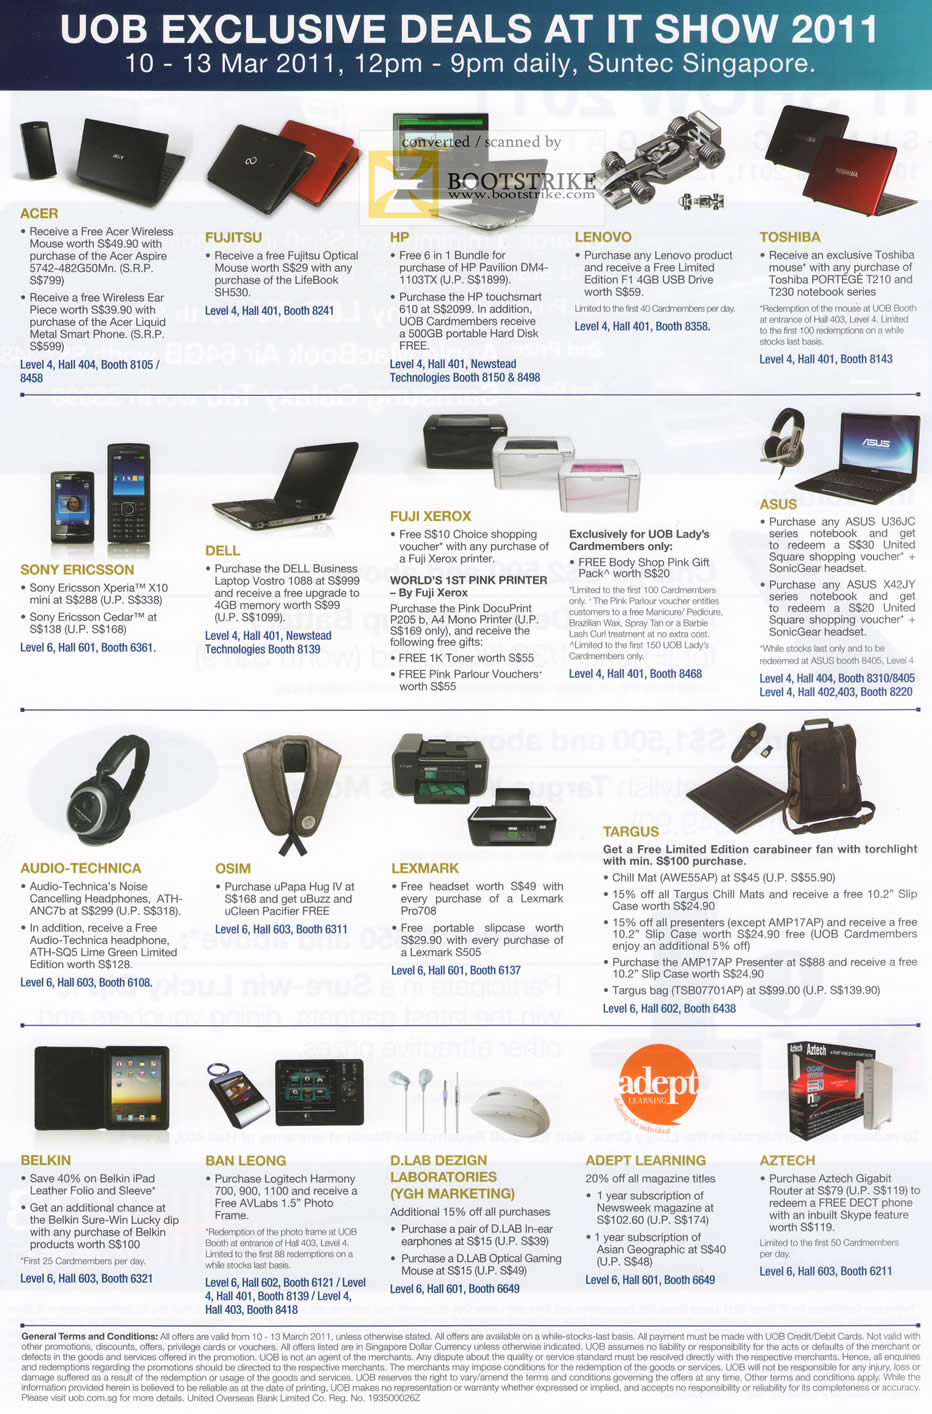 IT Show 2011 price list image brochure of UOB Credit Card Exclusive Deals Acer Fujitsu HP Lenovo Toshiba Dell Fuji Xerox ASUS OSIM Lexmark Ban Leong Aztech Belkin